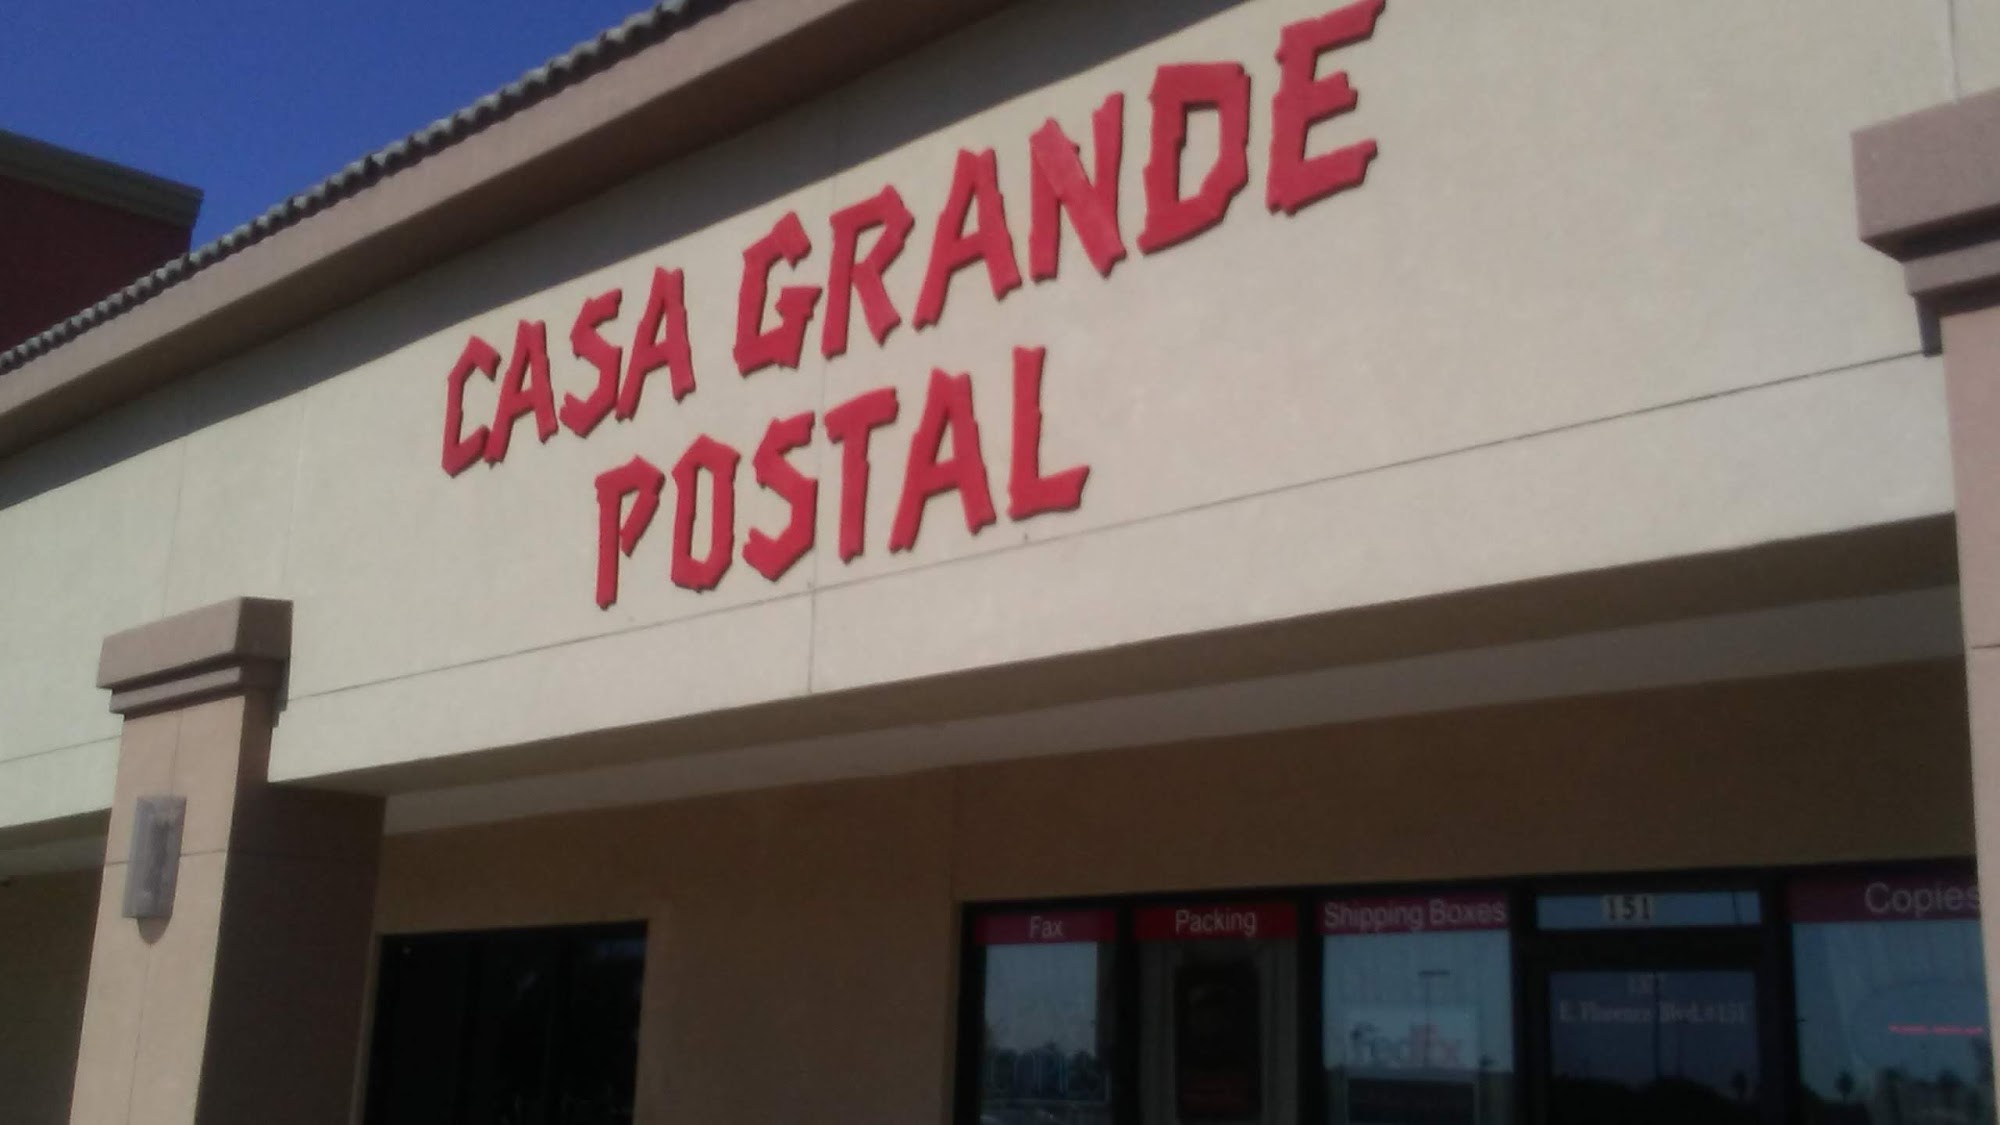 Casa Grande Postal